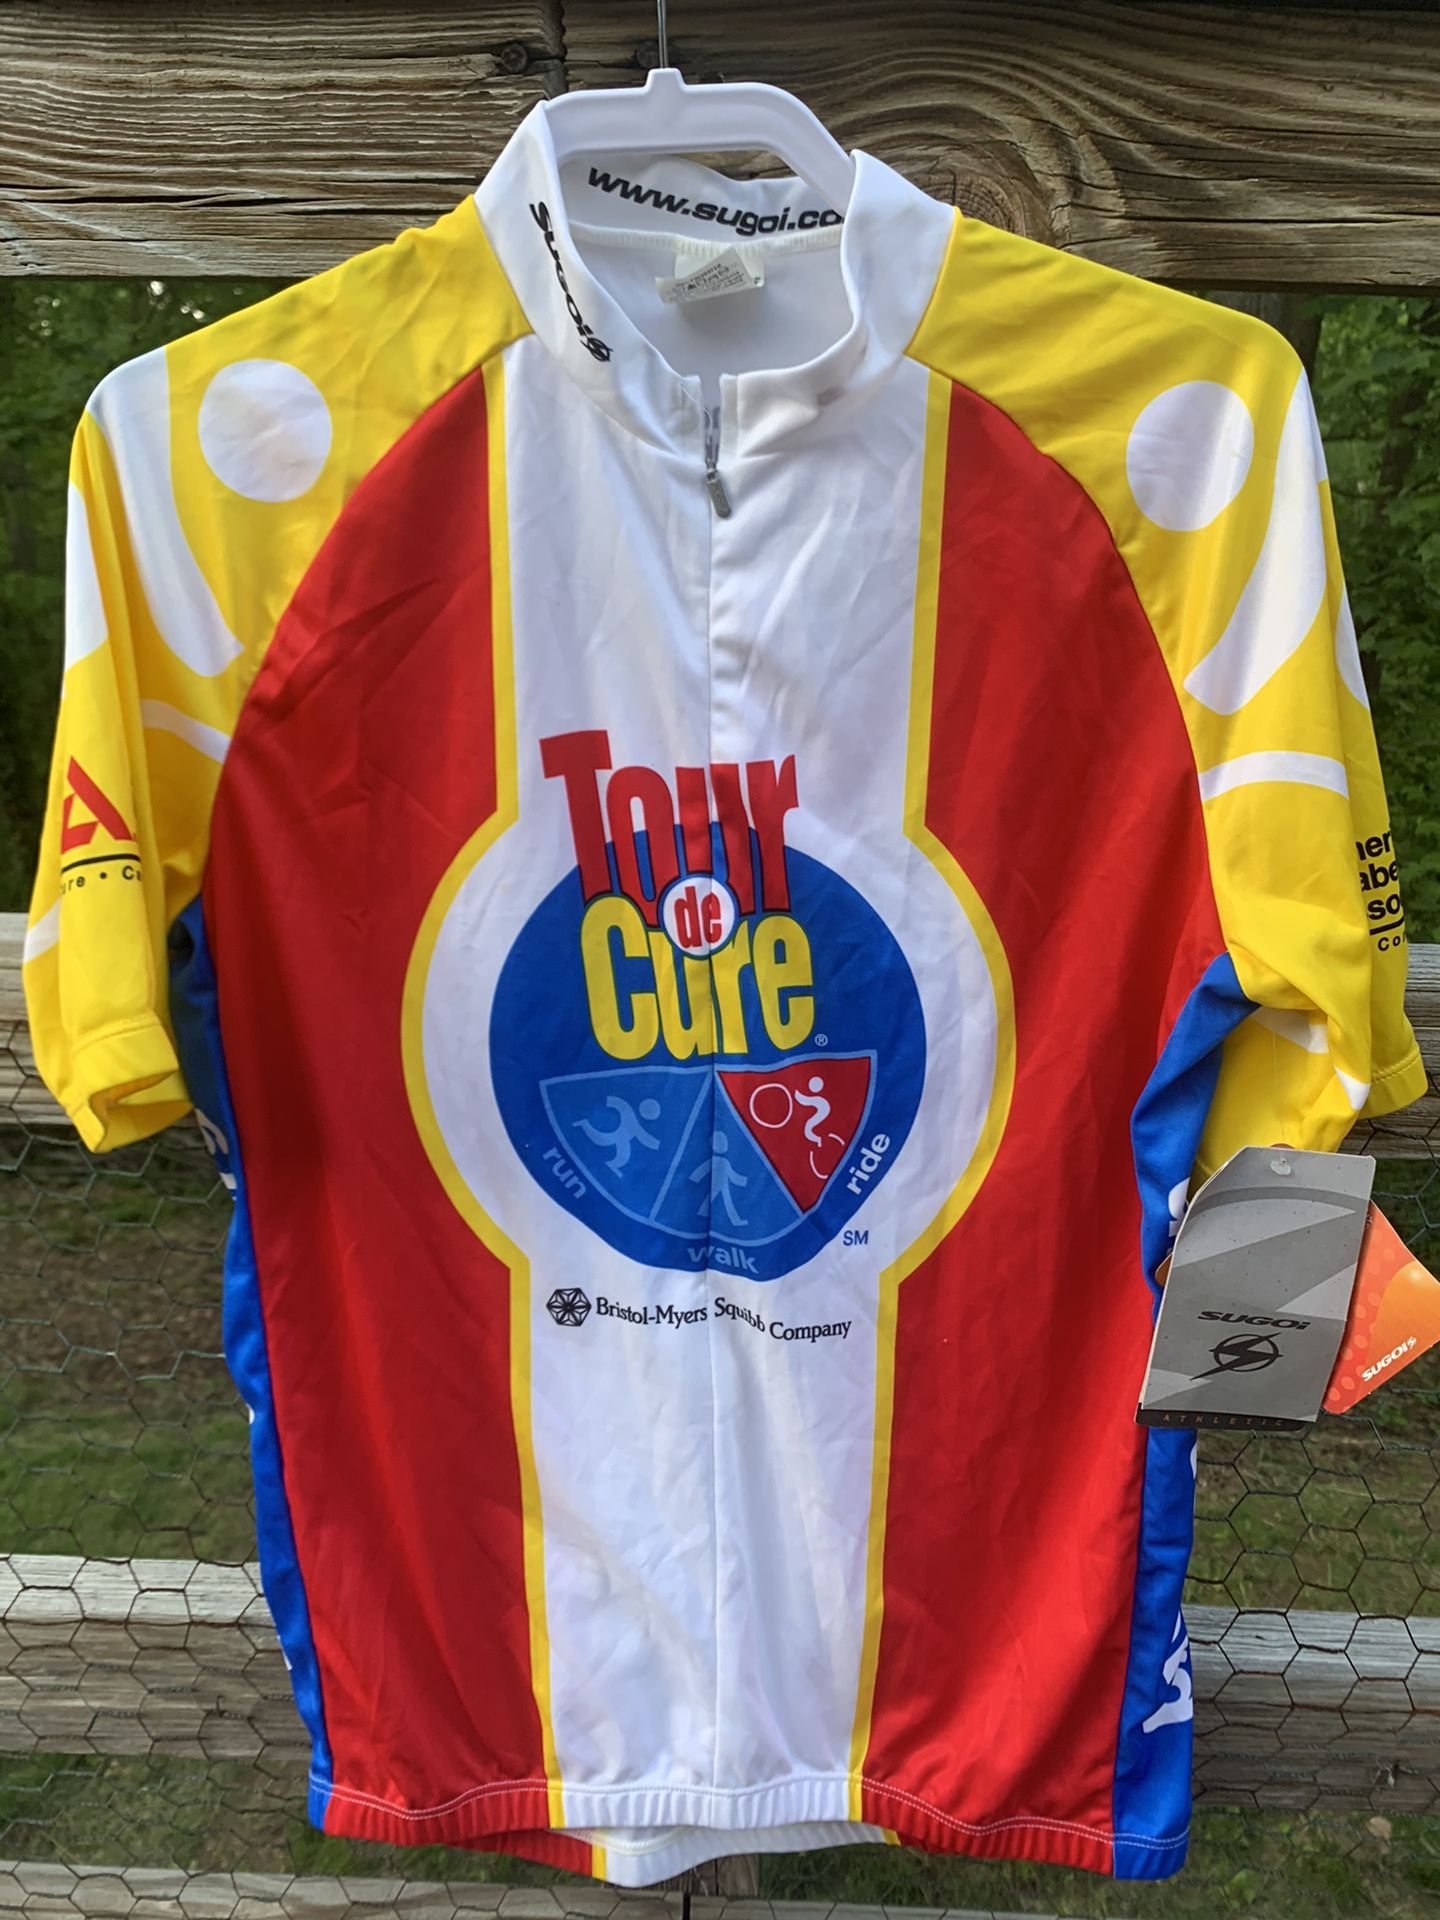 Tour de Cure bike race jersey